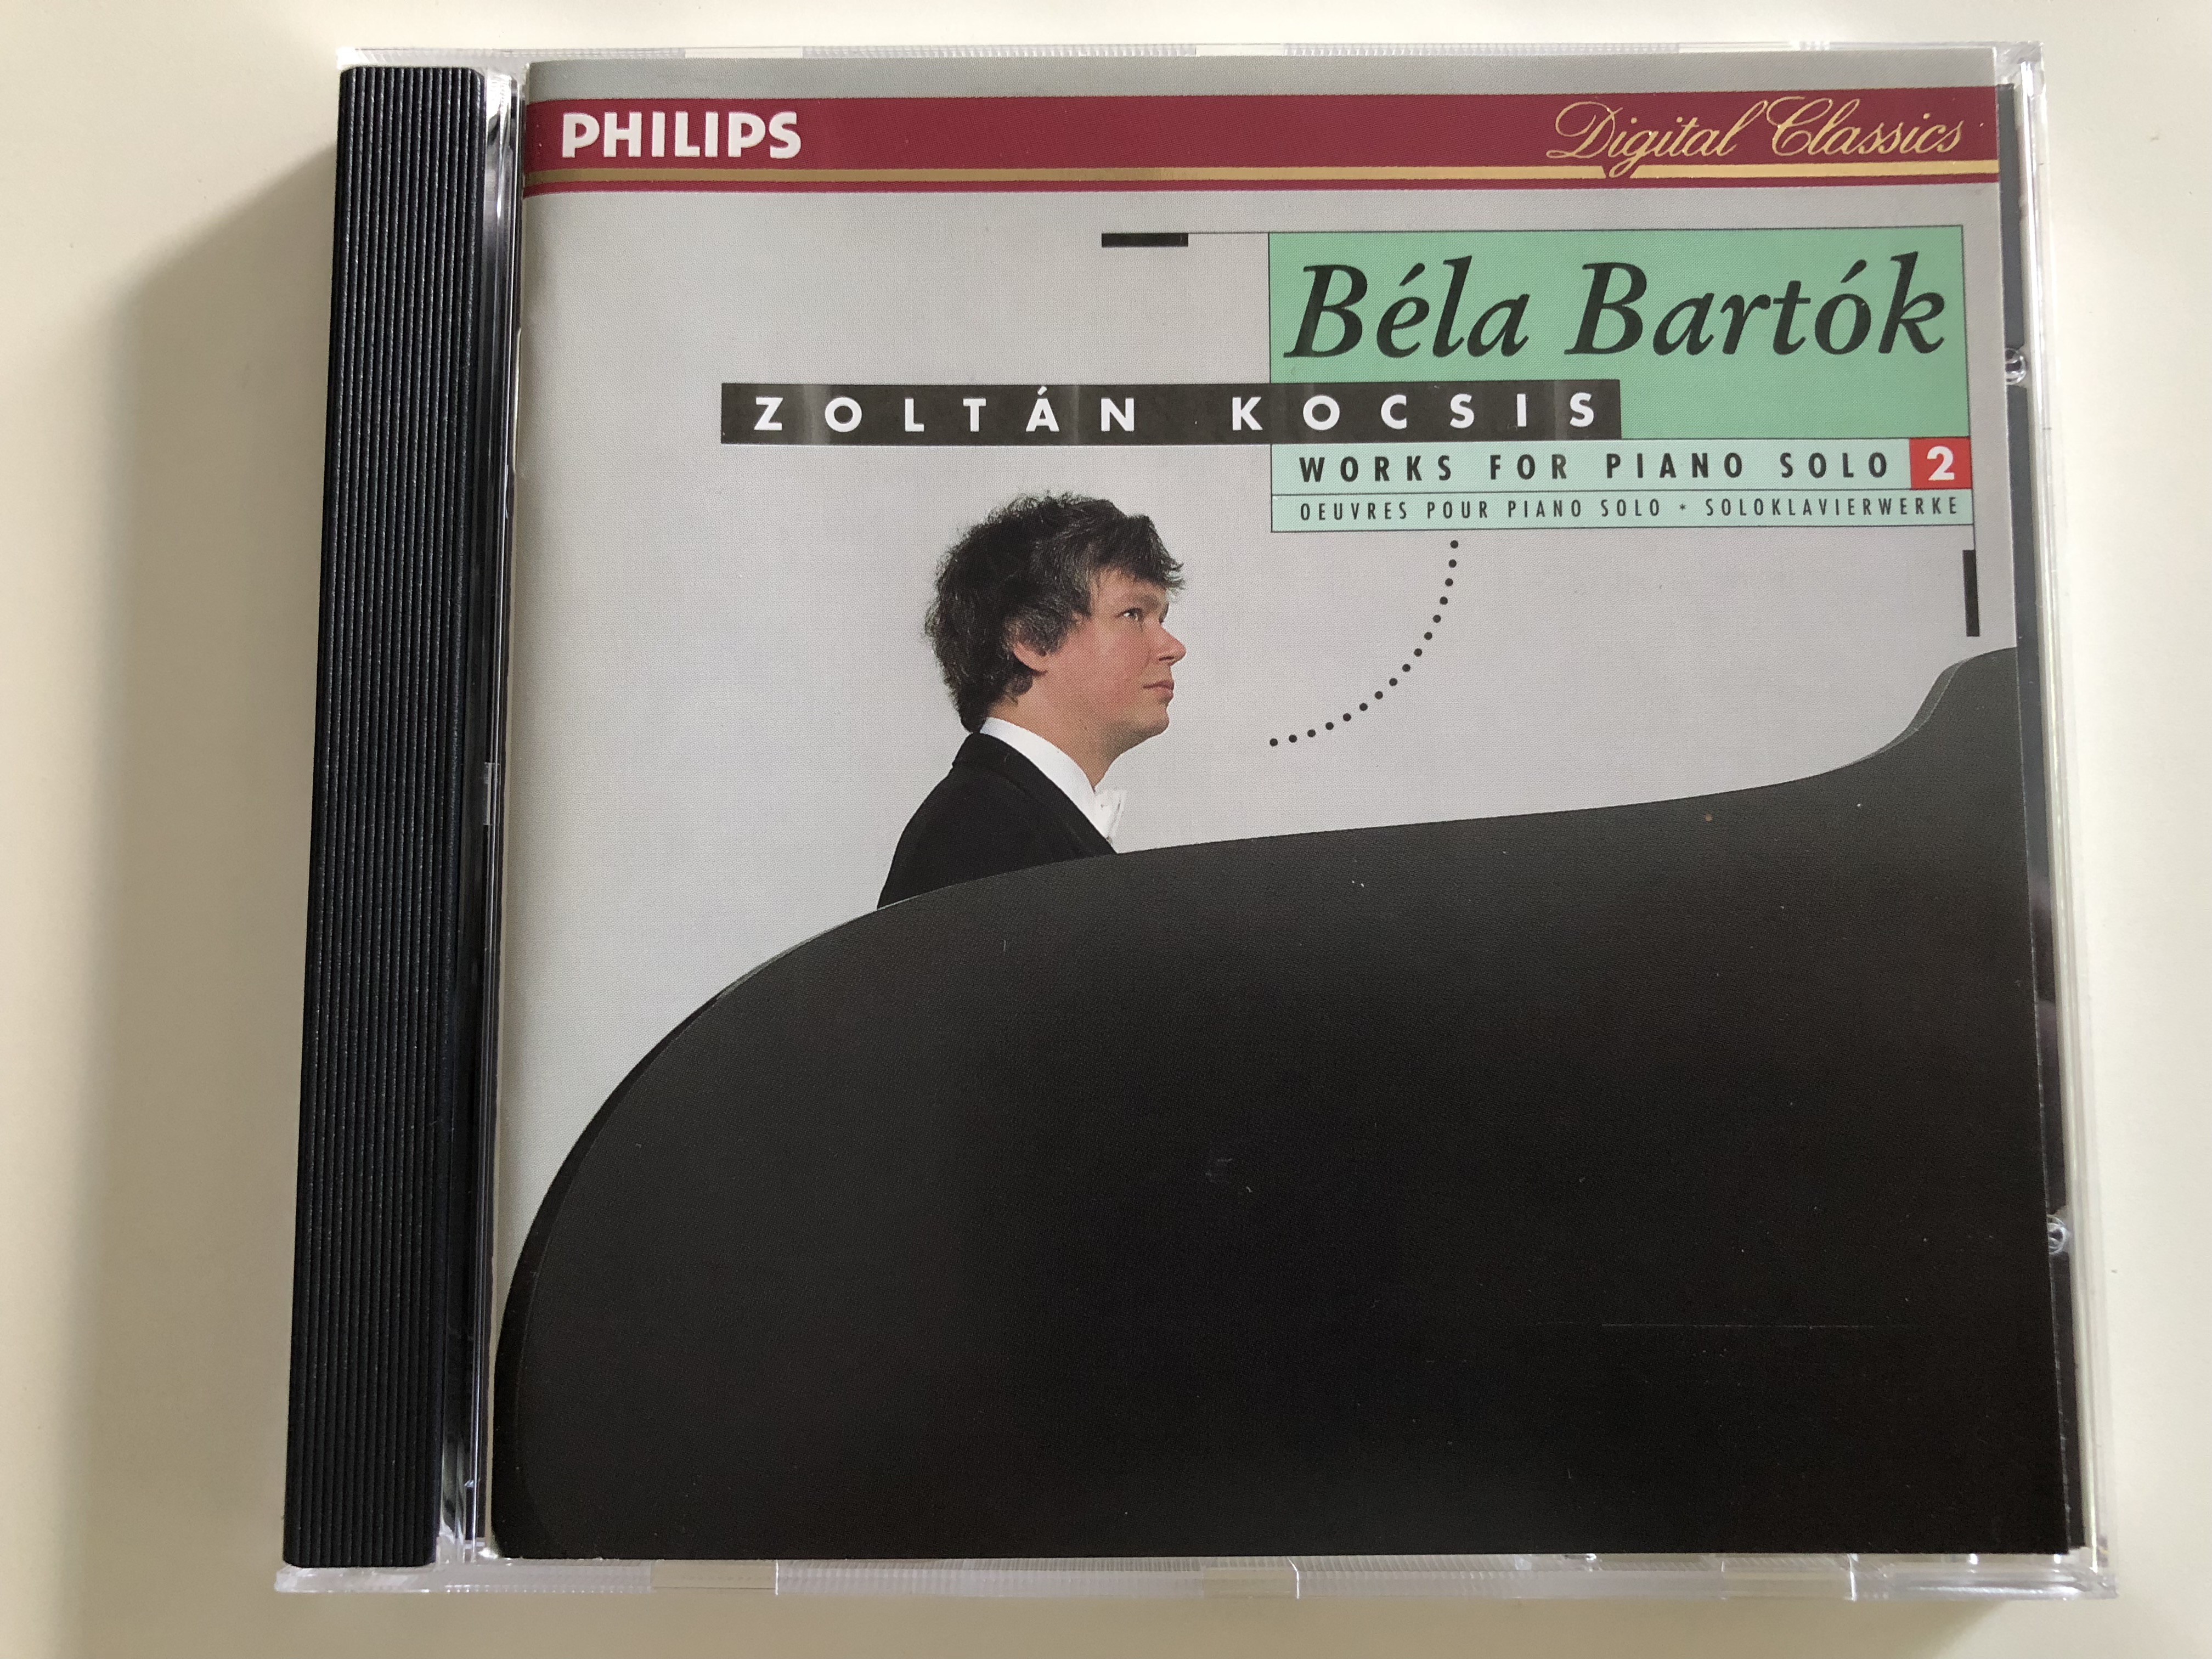 zolt-n-kocsis-b-la-bart-k-works-for-piano-solo-2-philips-digital-classics-audio-cd-1994-442-016-2-1-.jpg